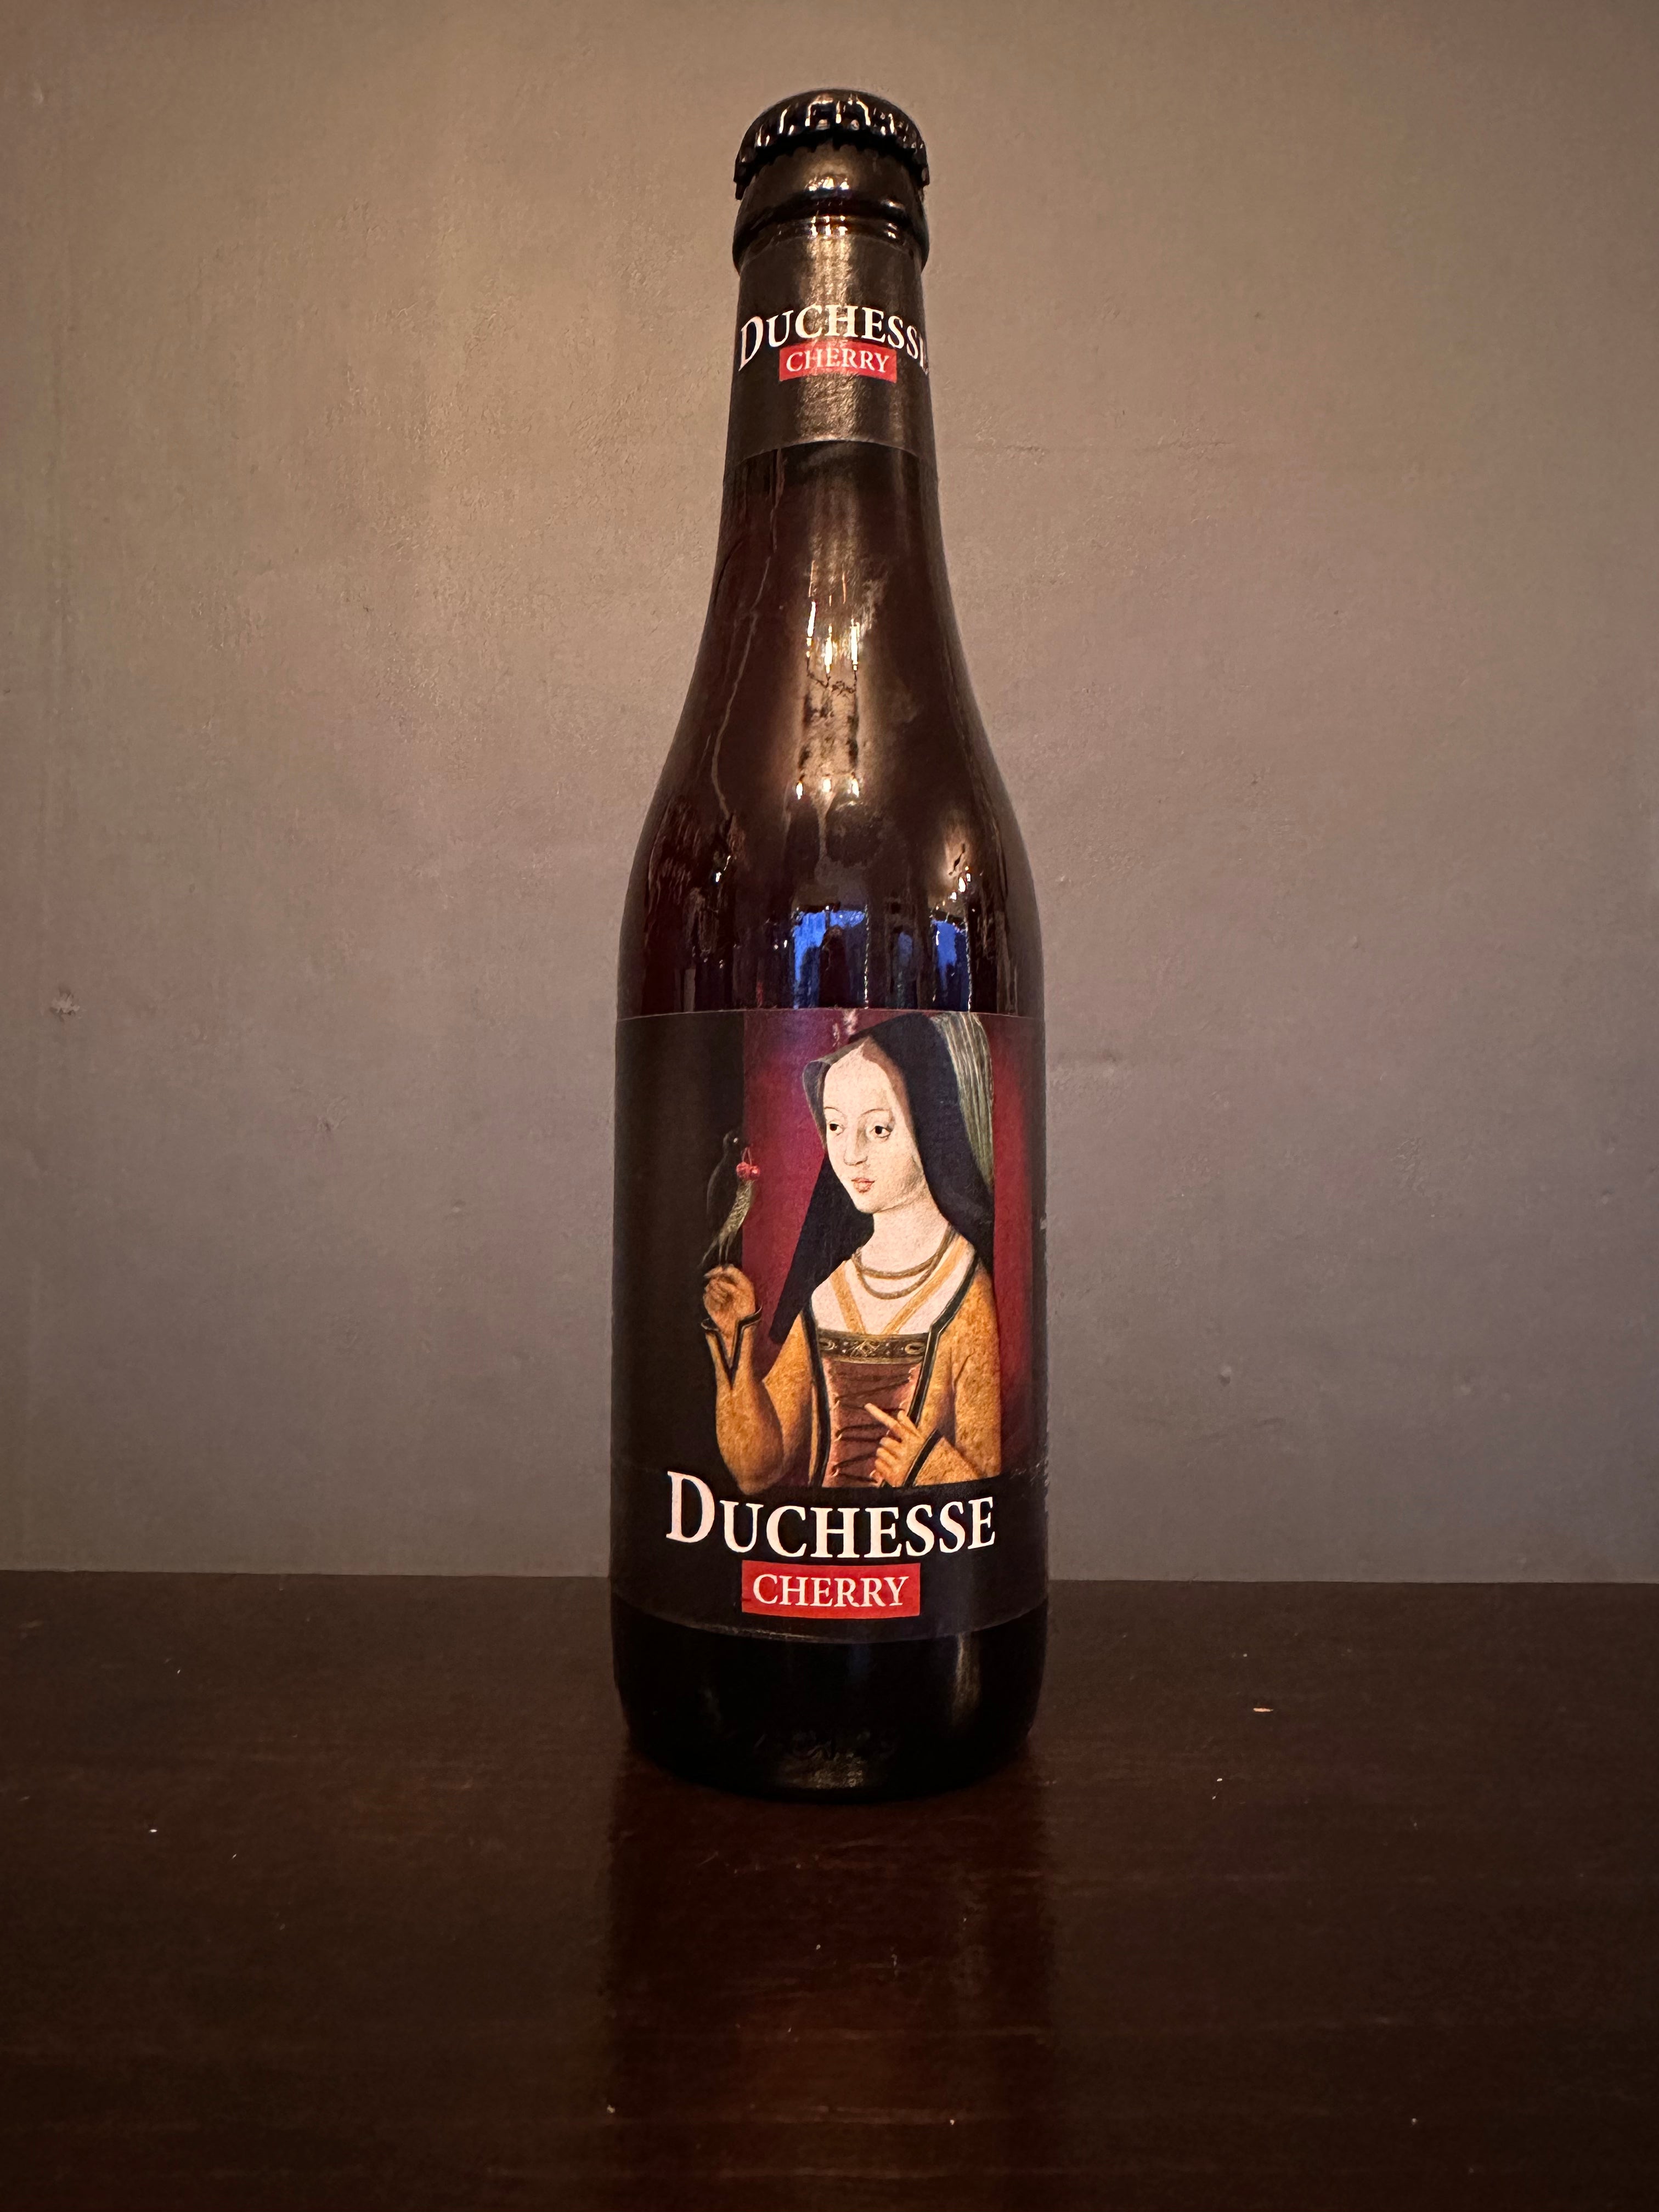 Duchess de Bourgogne Cherry Flanders Red 6.8%